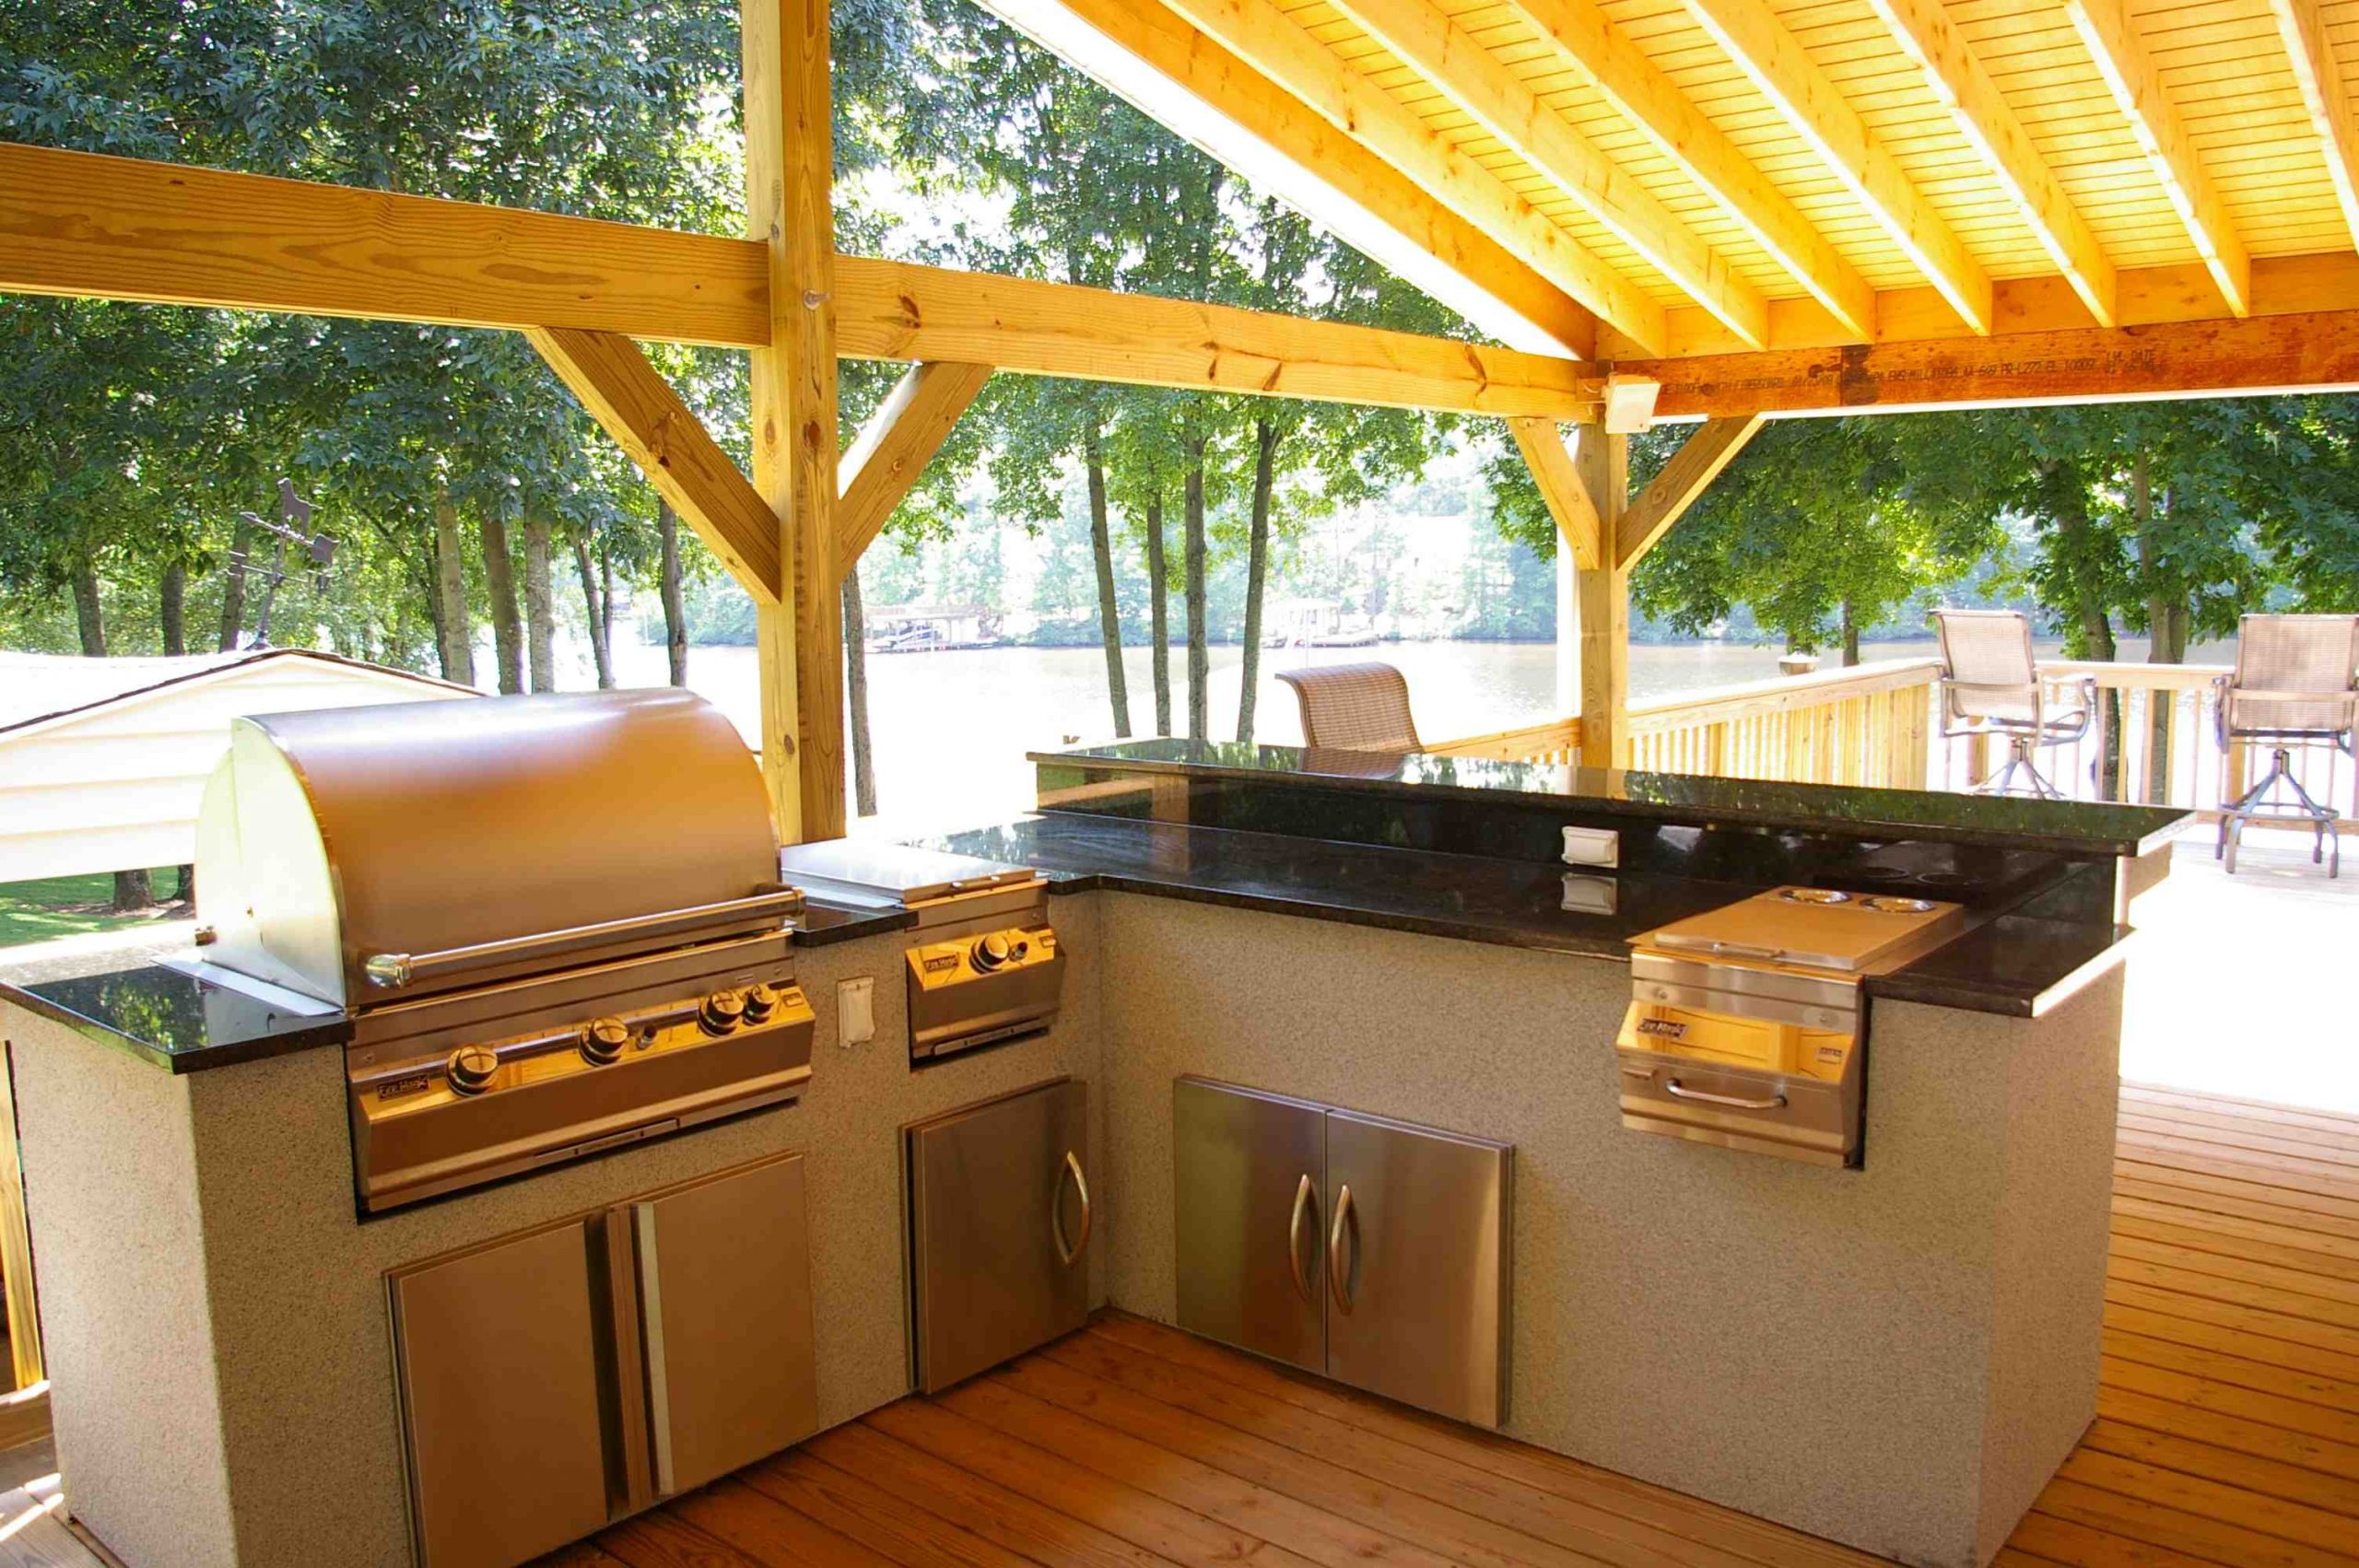 Outdoor Patio Kitchen Ideas
 Outdoor Kitchen Design How to Design Outdoor Kitchen